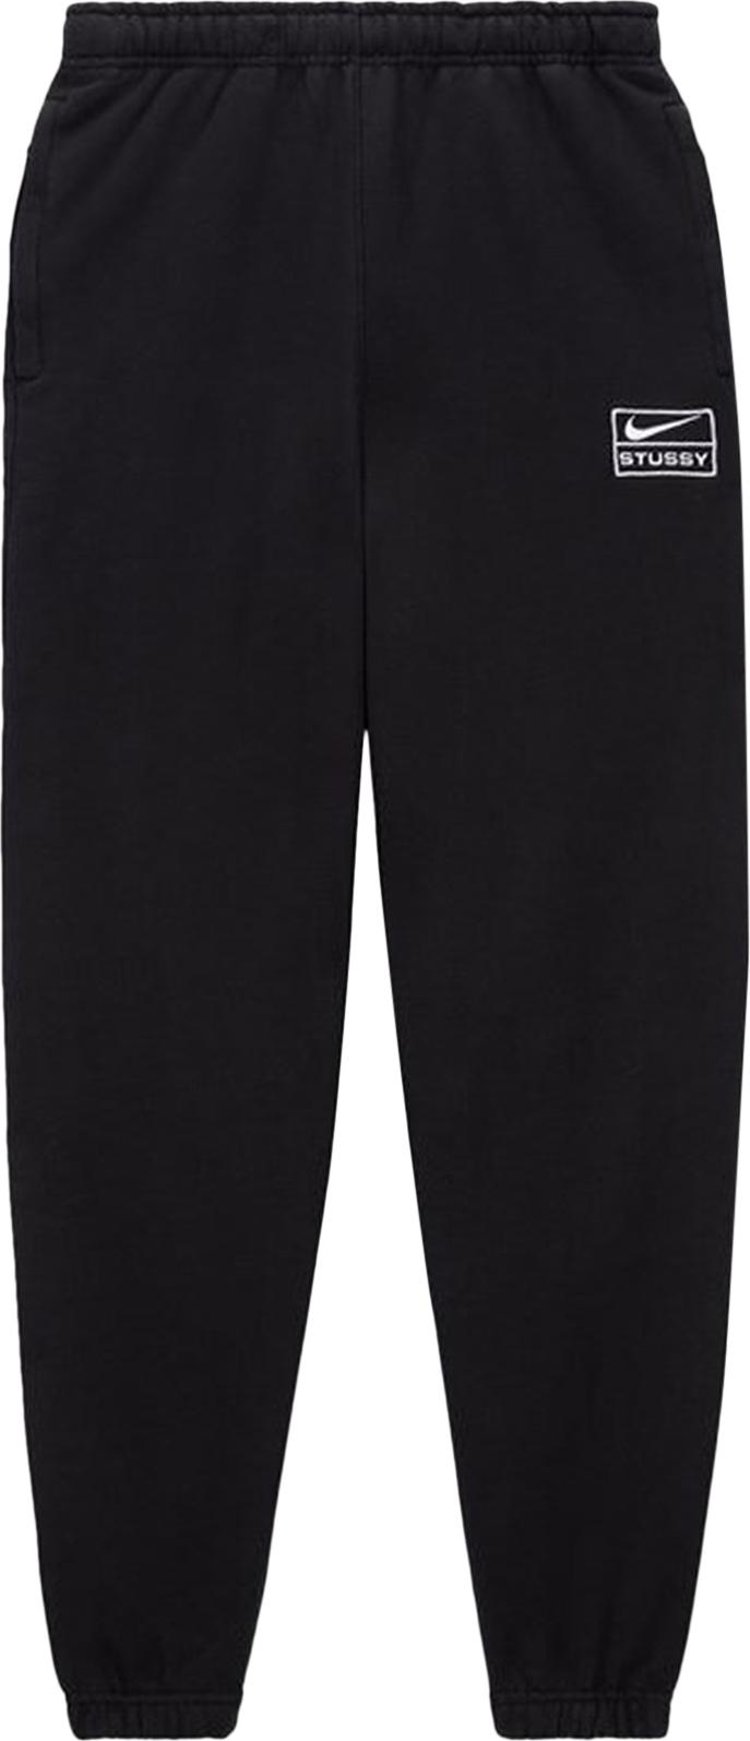 Buy Nike x Stussy Fleece Sweatpants 'Black' - FN5235 010 | GOAT